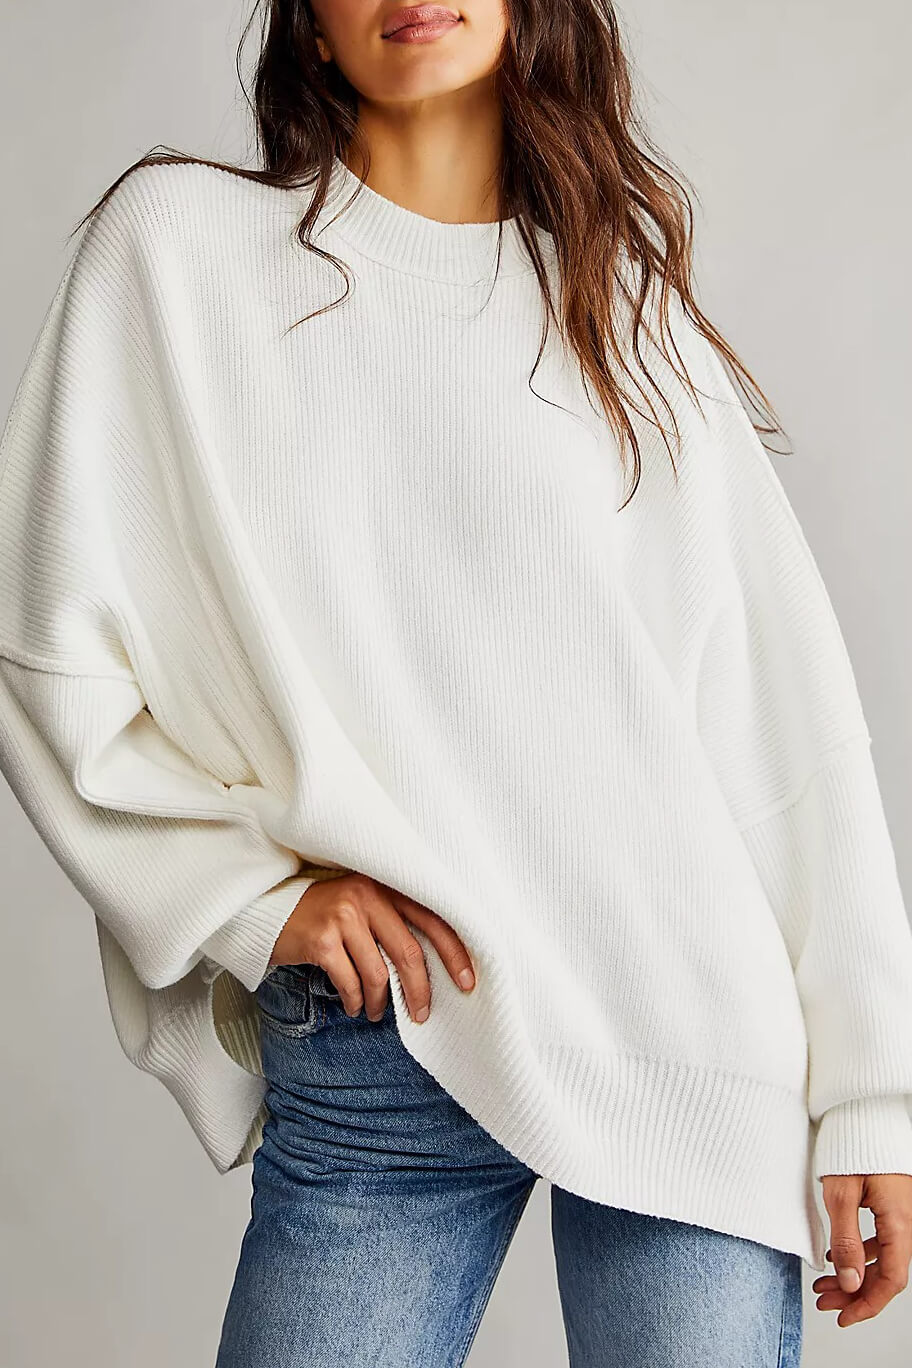 white oversized sweater